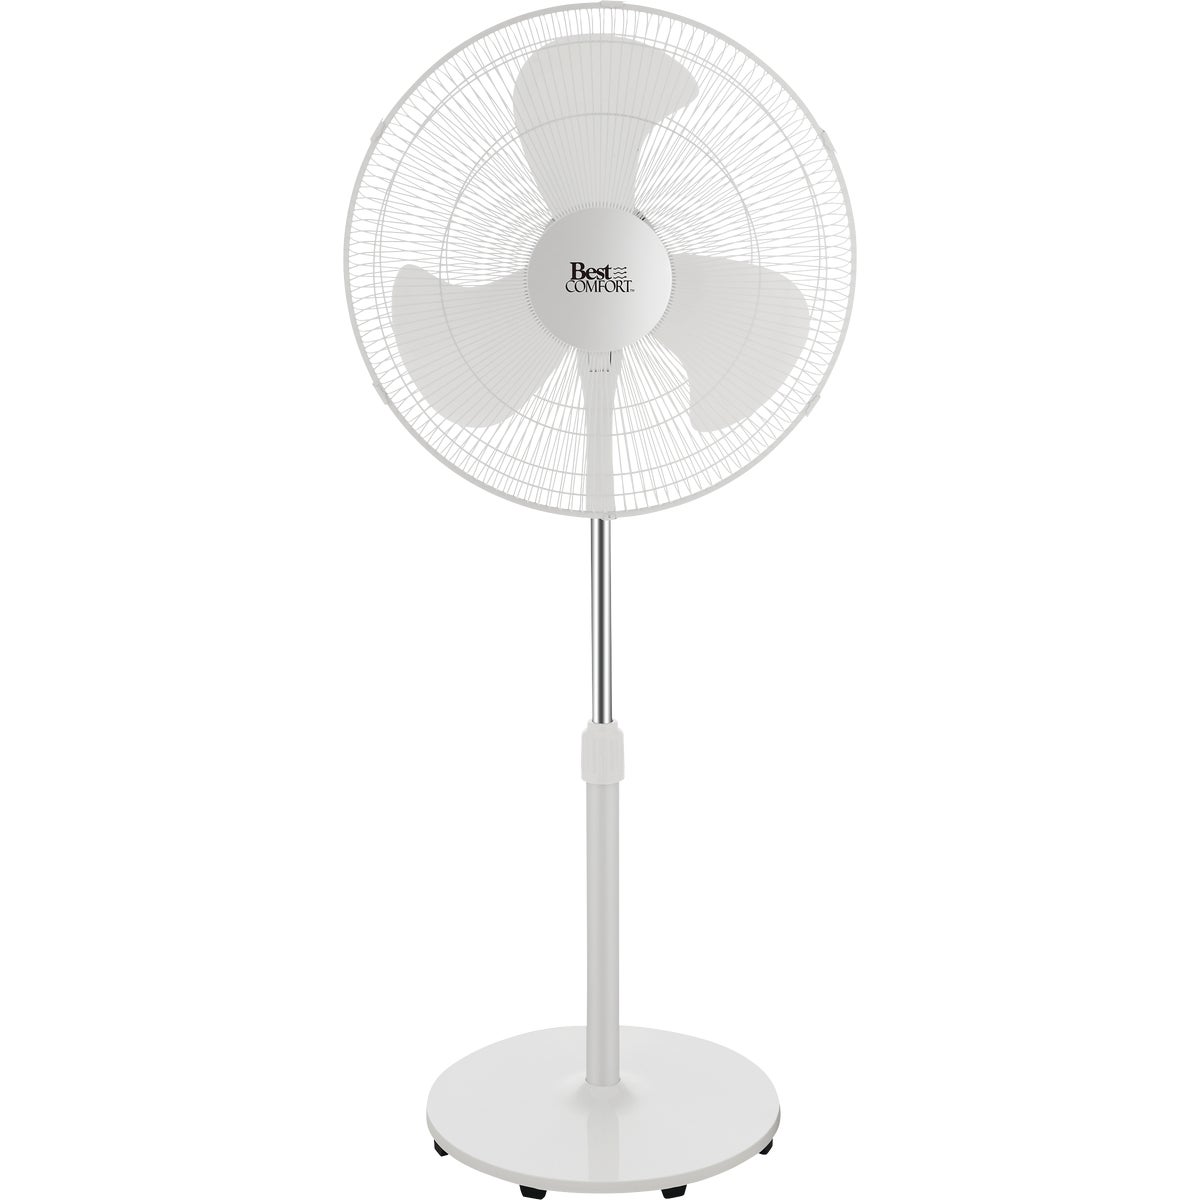 Item 500918, 18-inch oscillating pedestal fan.